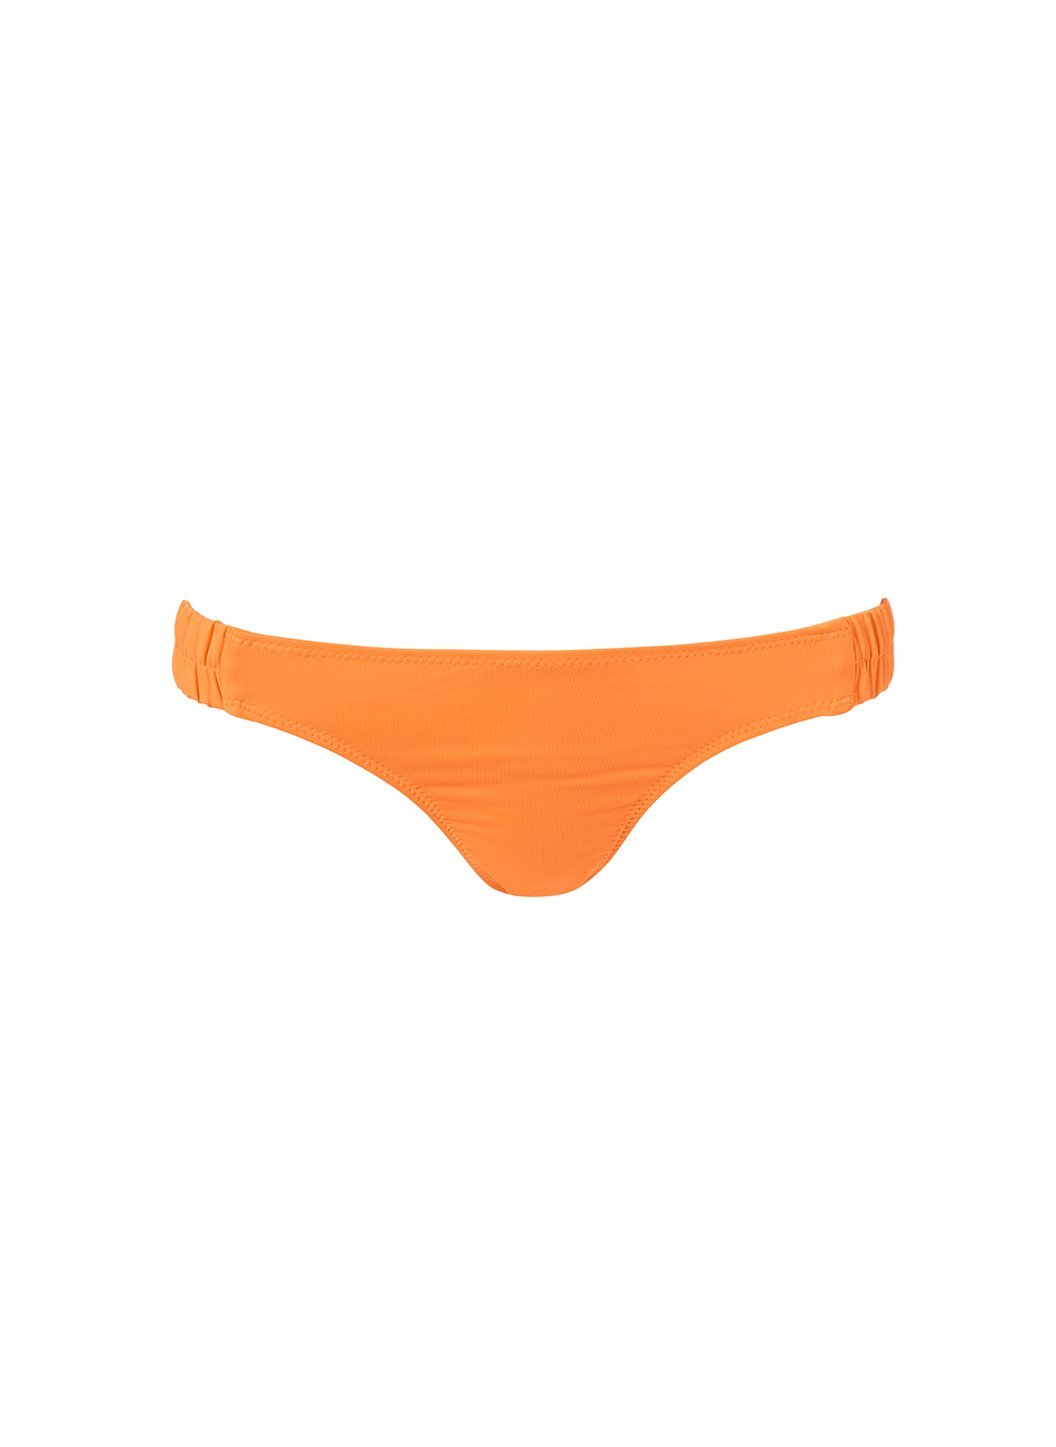 trieste-orange-ruched-bandeau-bikini-bottom